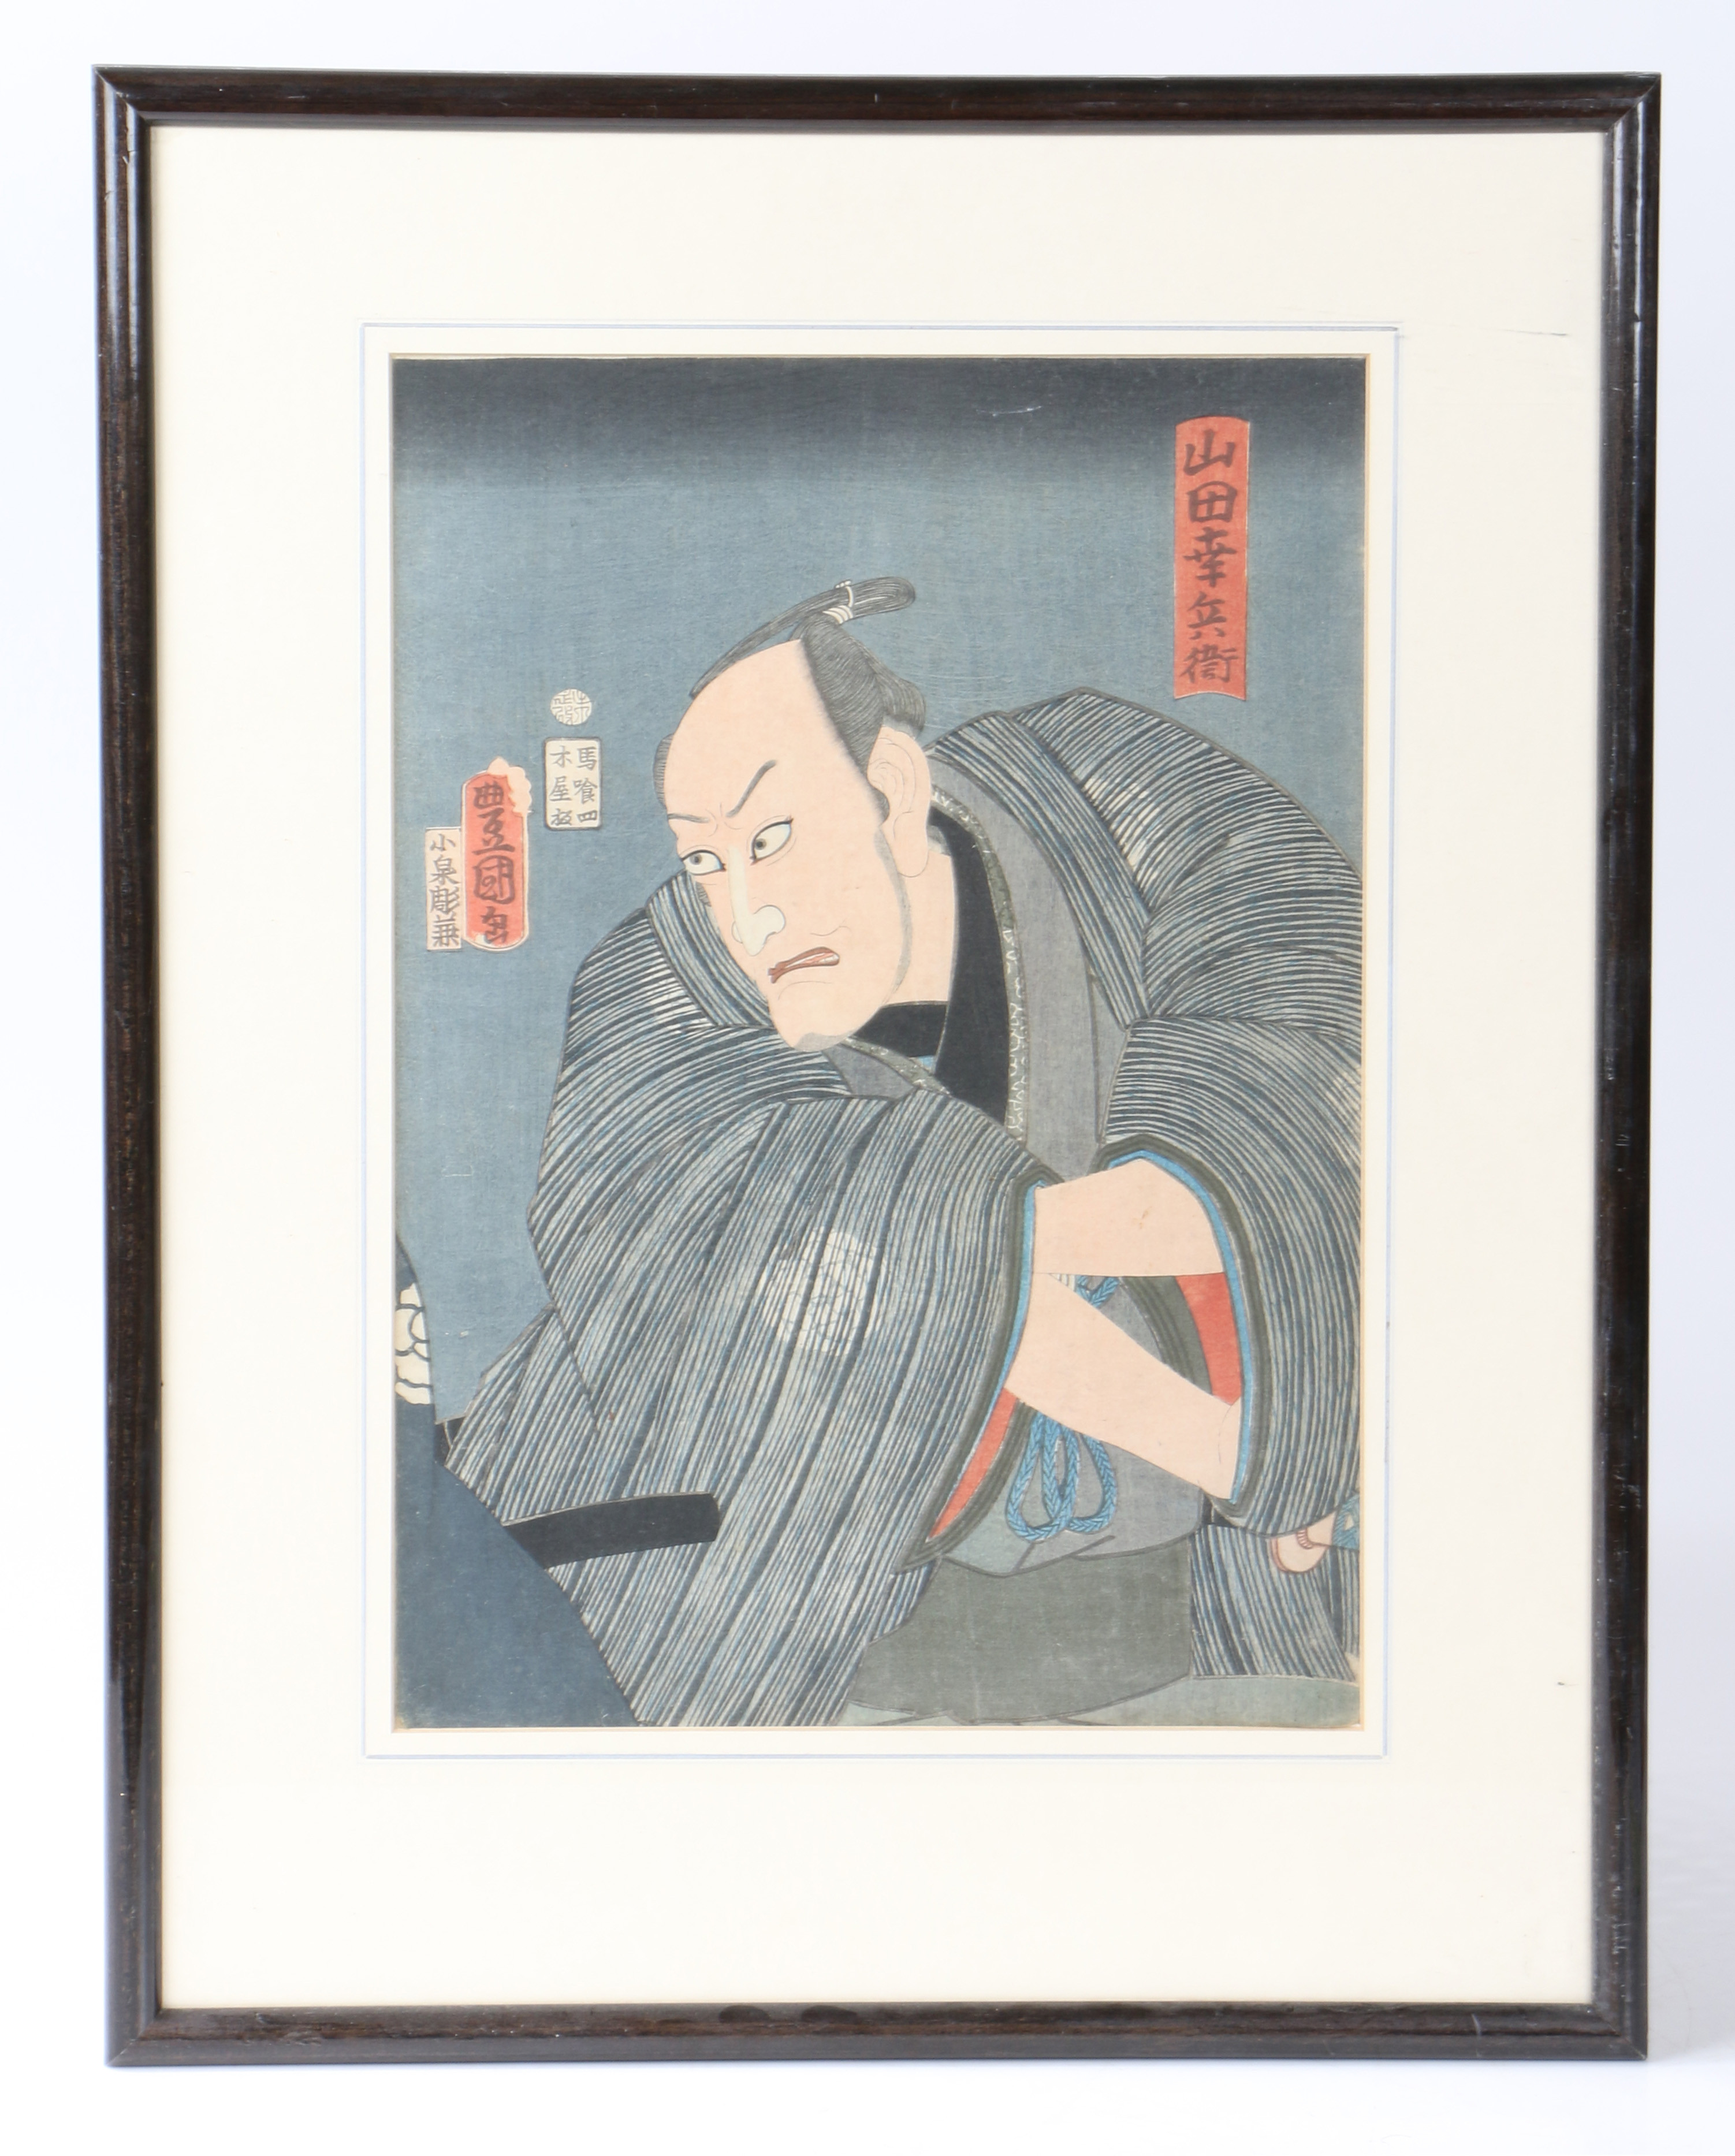 UTAGAWA KUNISADA OR UTAGAWA TOYOKUNI III (JAPANESE 1786-1865) "SAMURAI".